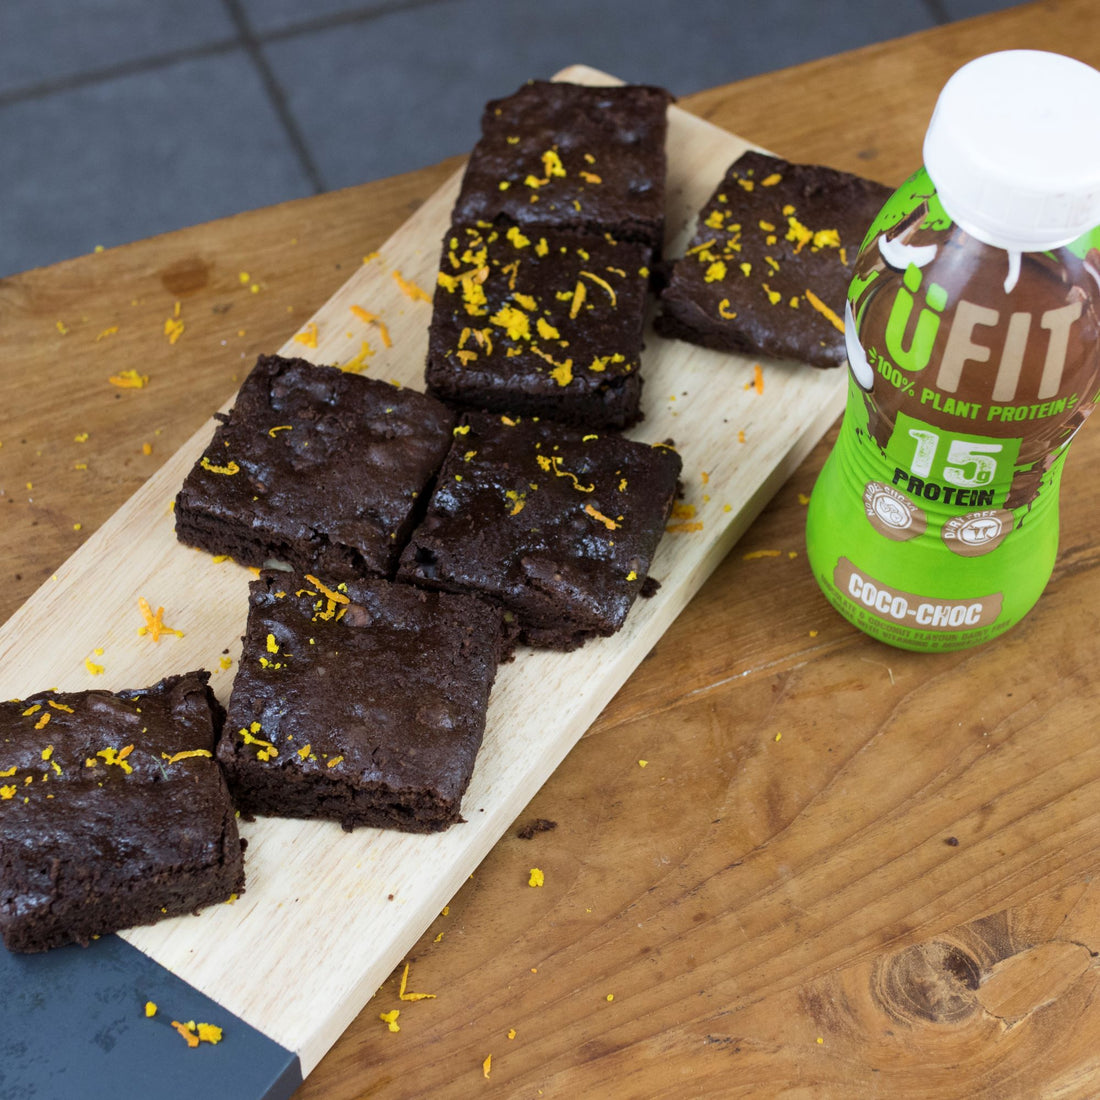 UFIT Chocolate & Pecan Plant Protein Brownies